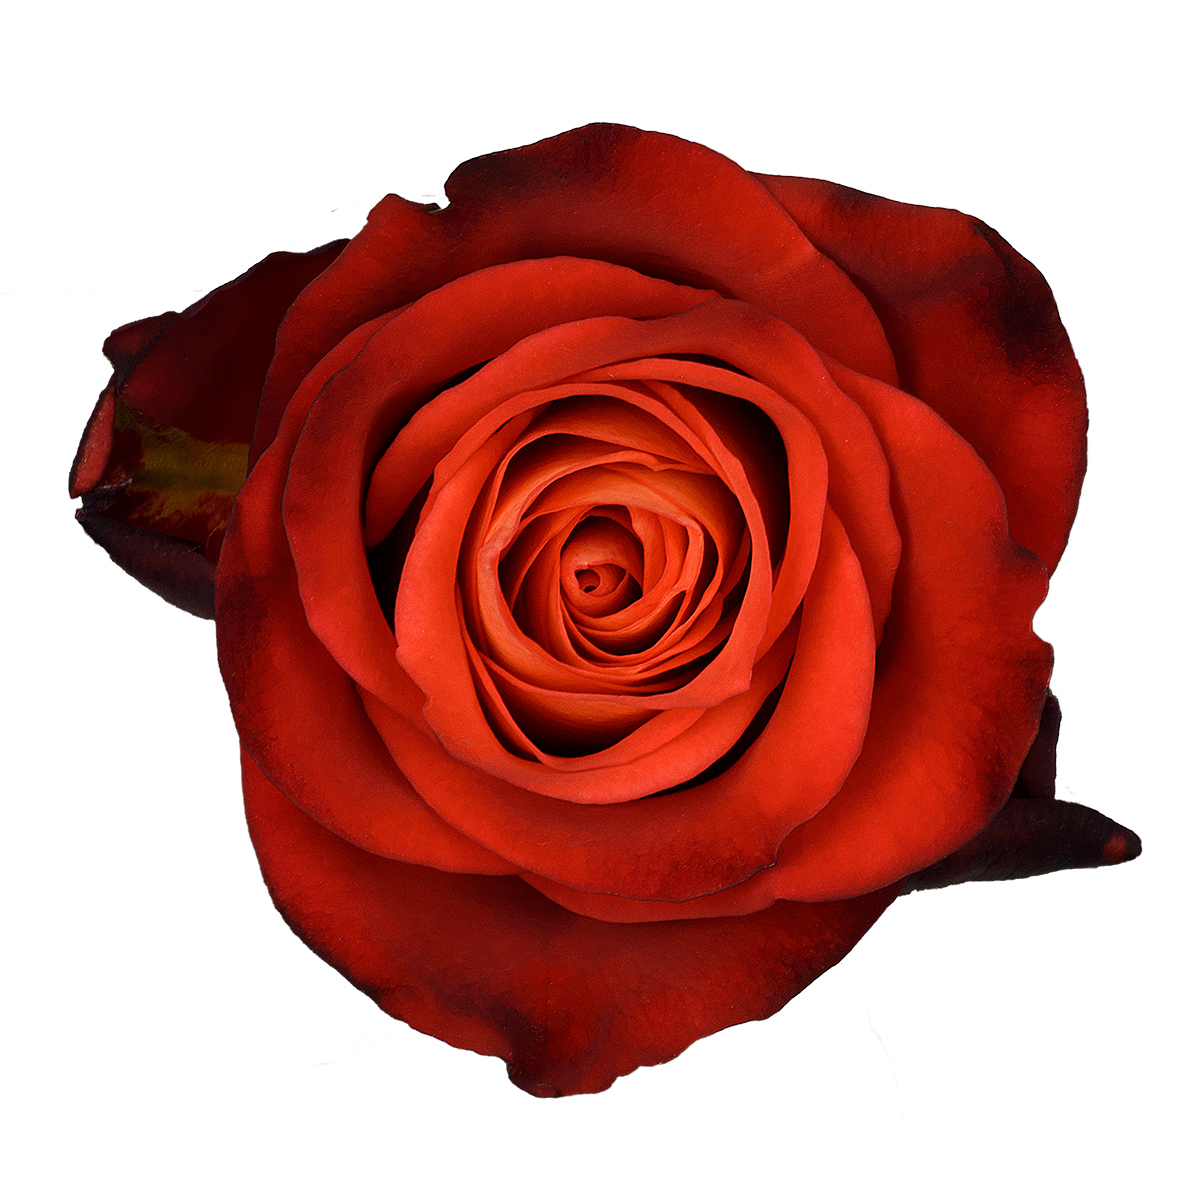 FIORELLA rose - Florist Rose Paradise! - Decofresh TOTF2020 on Thursd